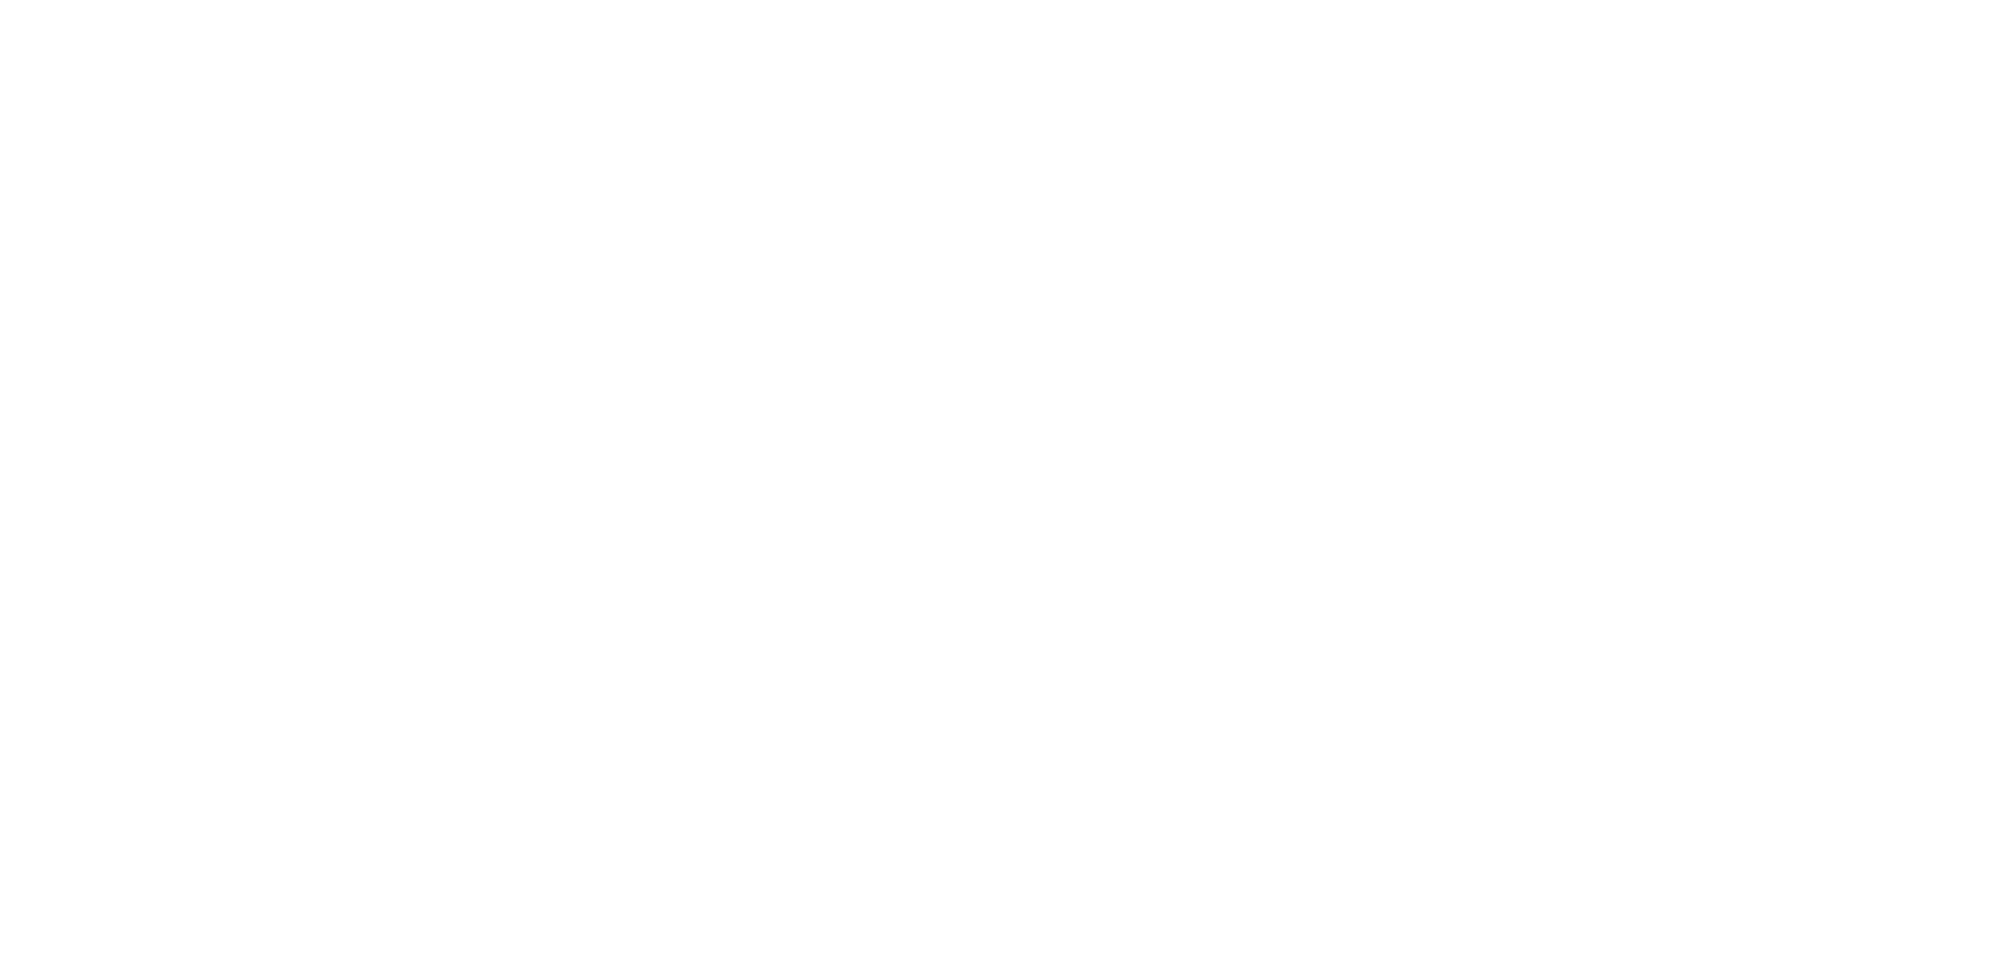 Canterbury District Health Board